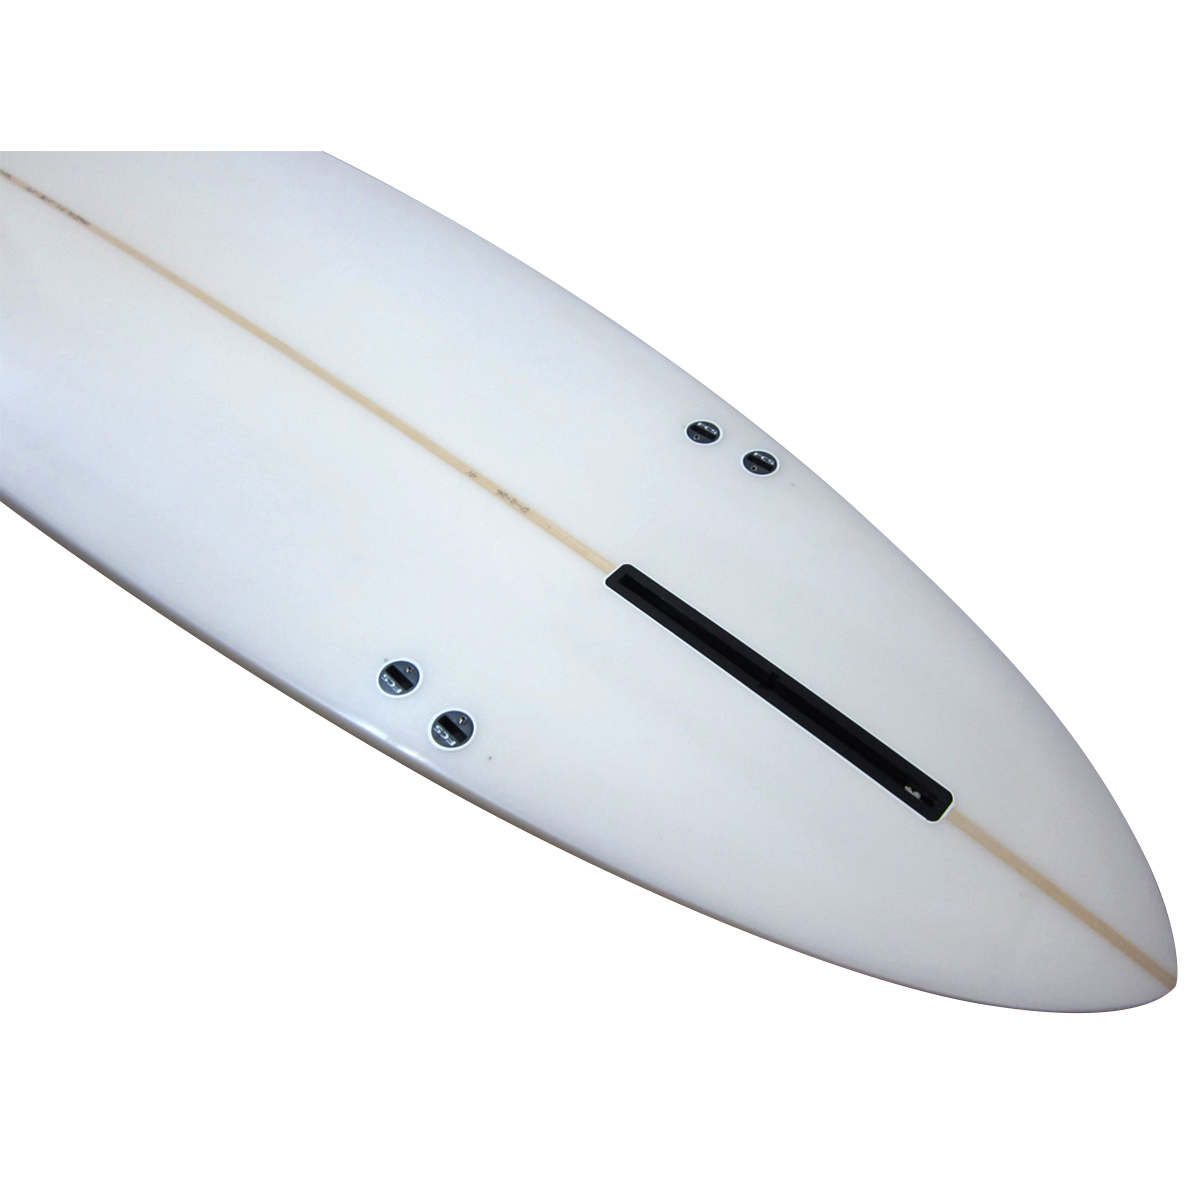 DRIFT SURF  / Genki Model Custom 9`0 Shaped By MITSU